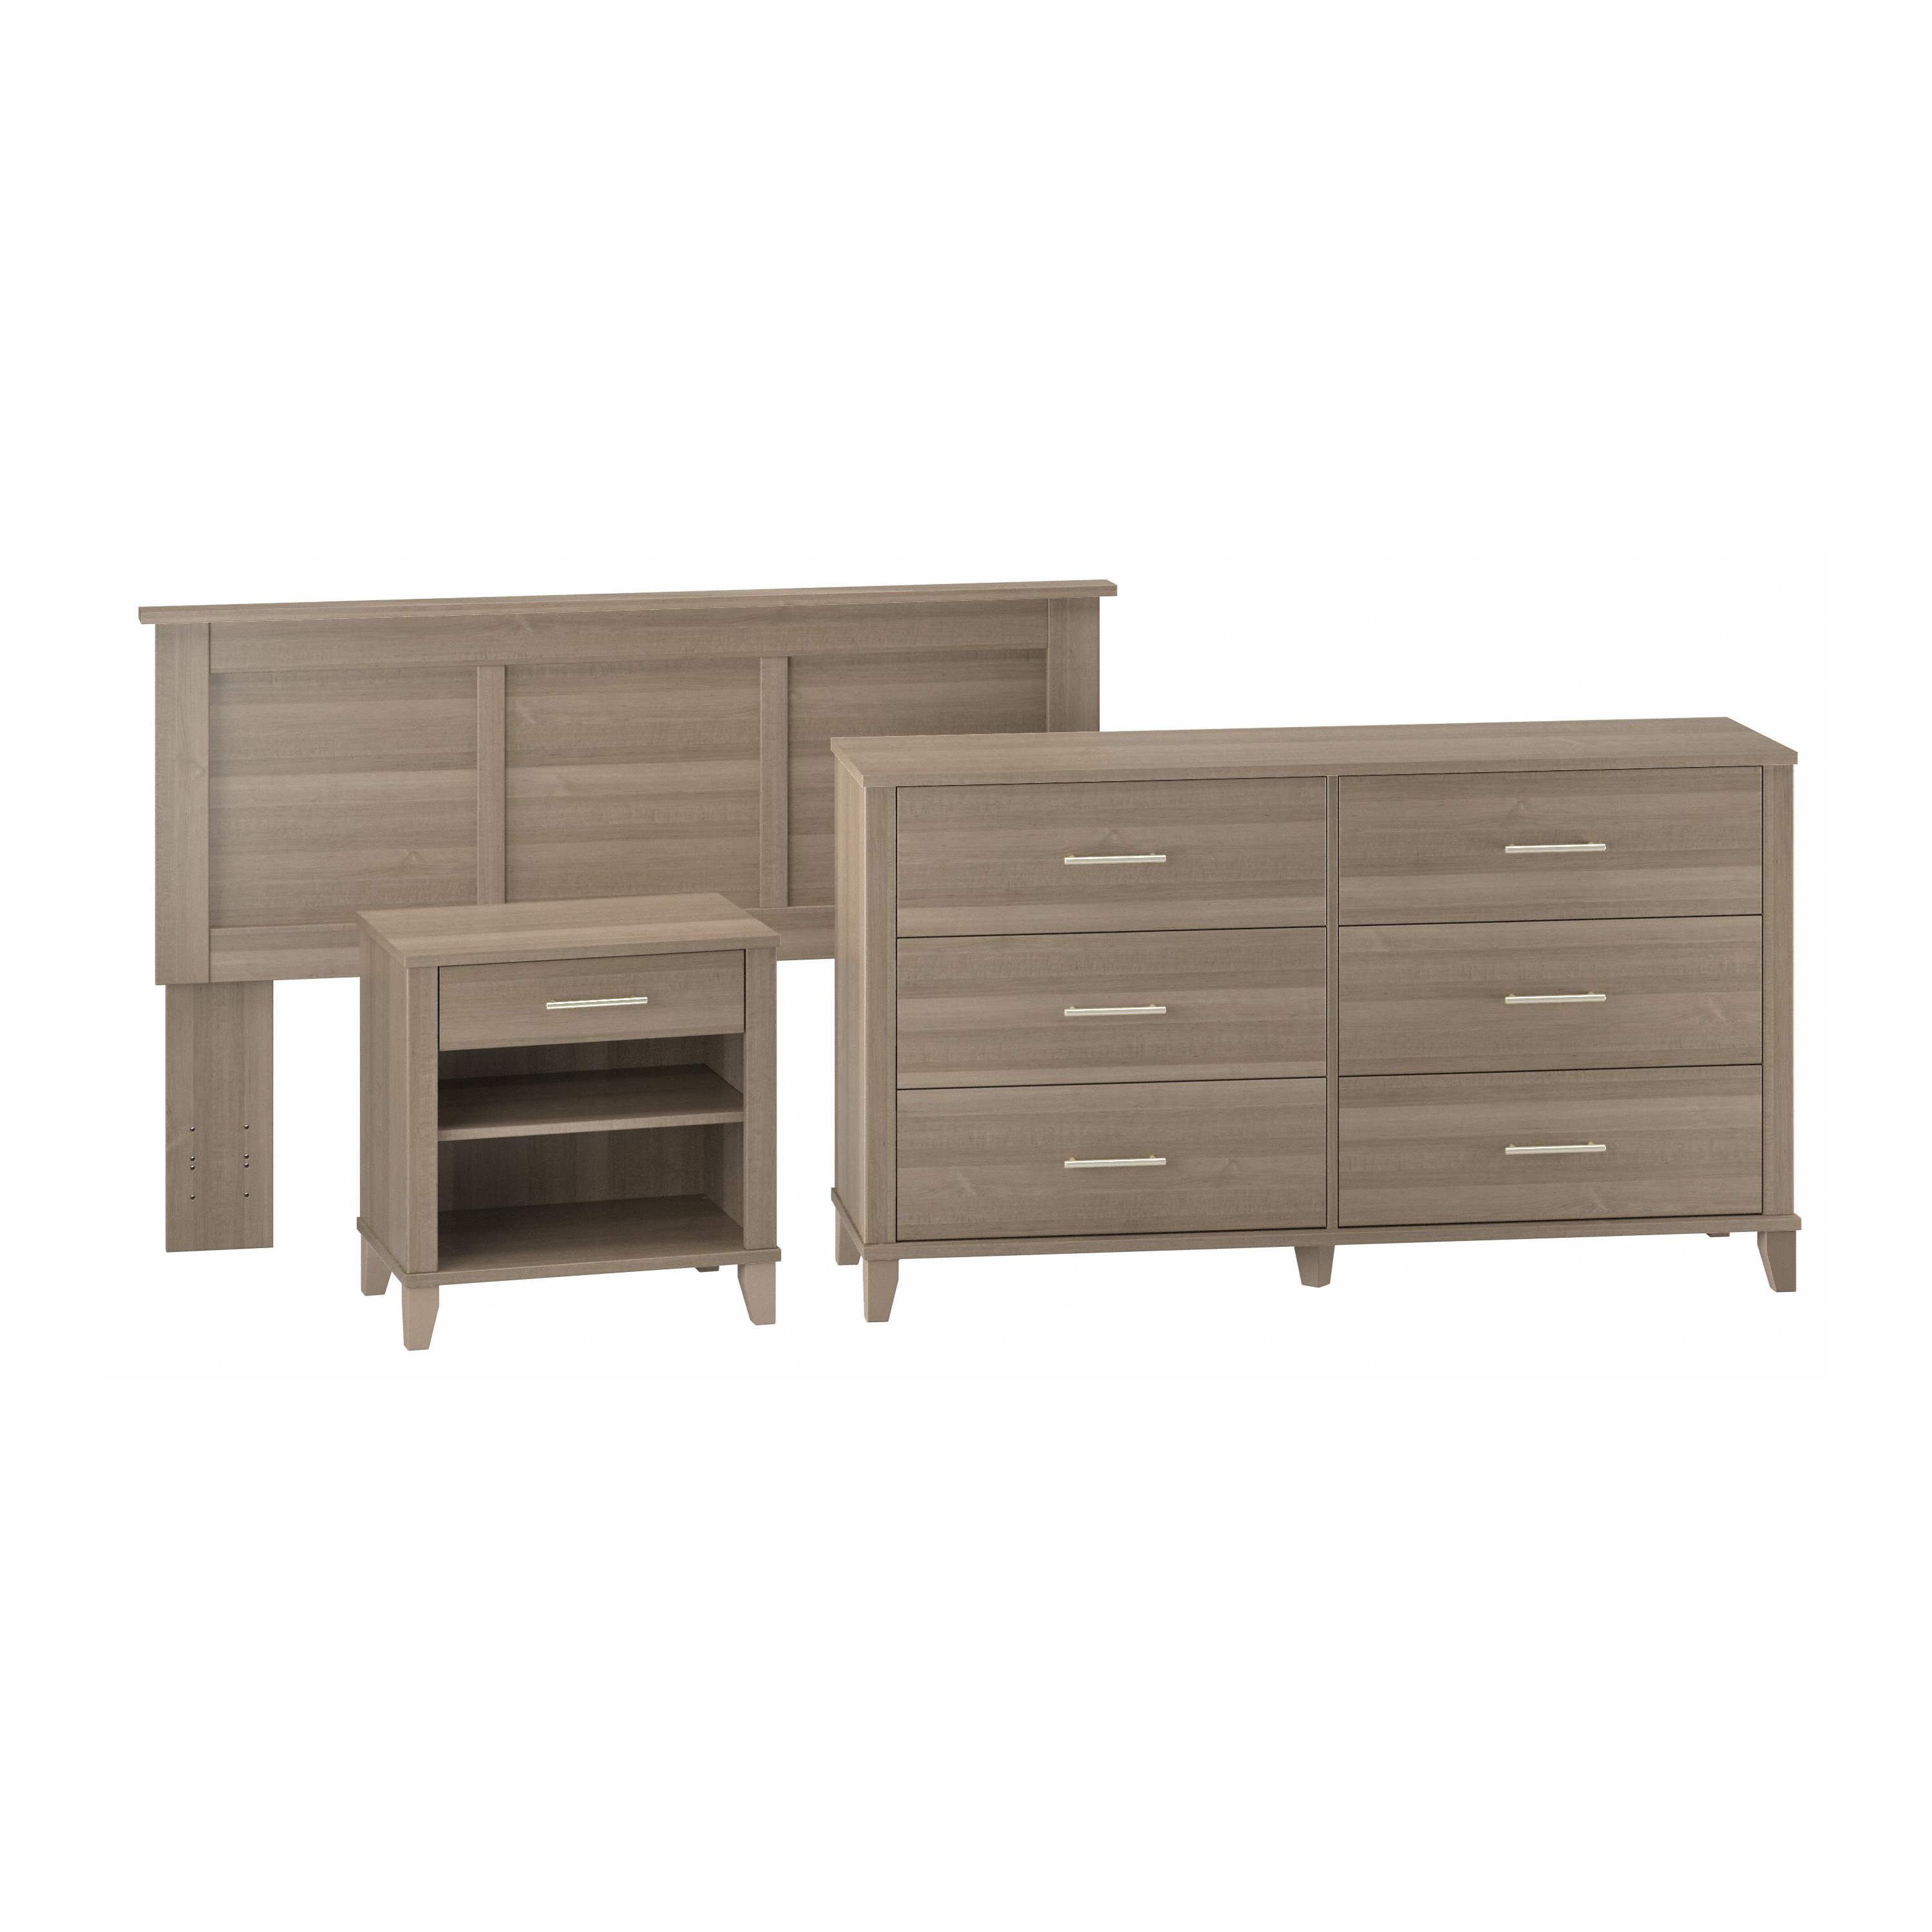 Shop Bush Furniture Somerset Full/Queen Size Headboard, Dresser and Nightstand Bedroom Set 02 SET003AG #color_ash gray